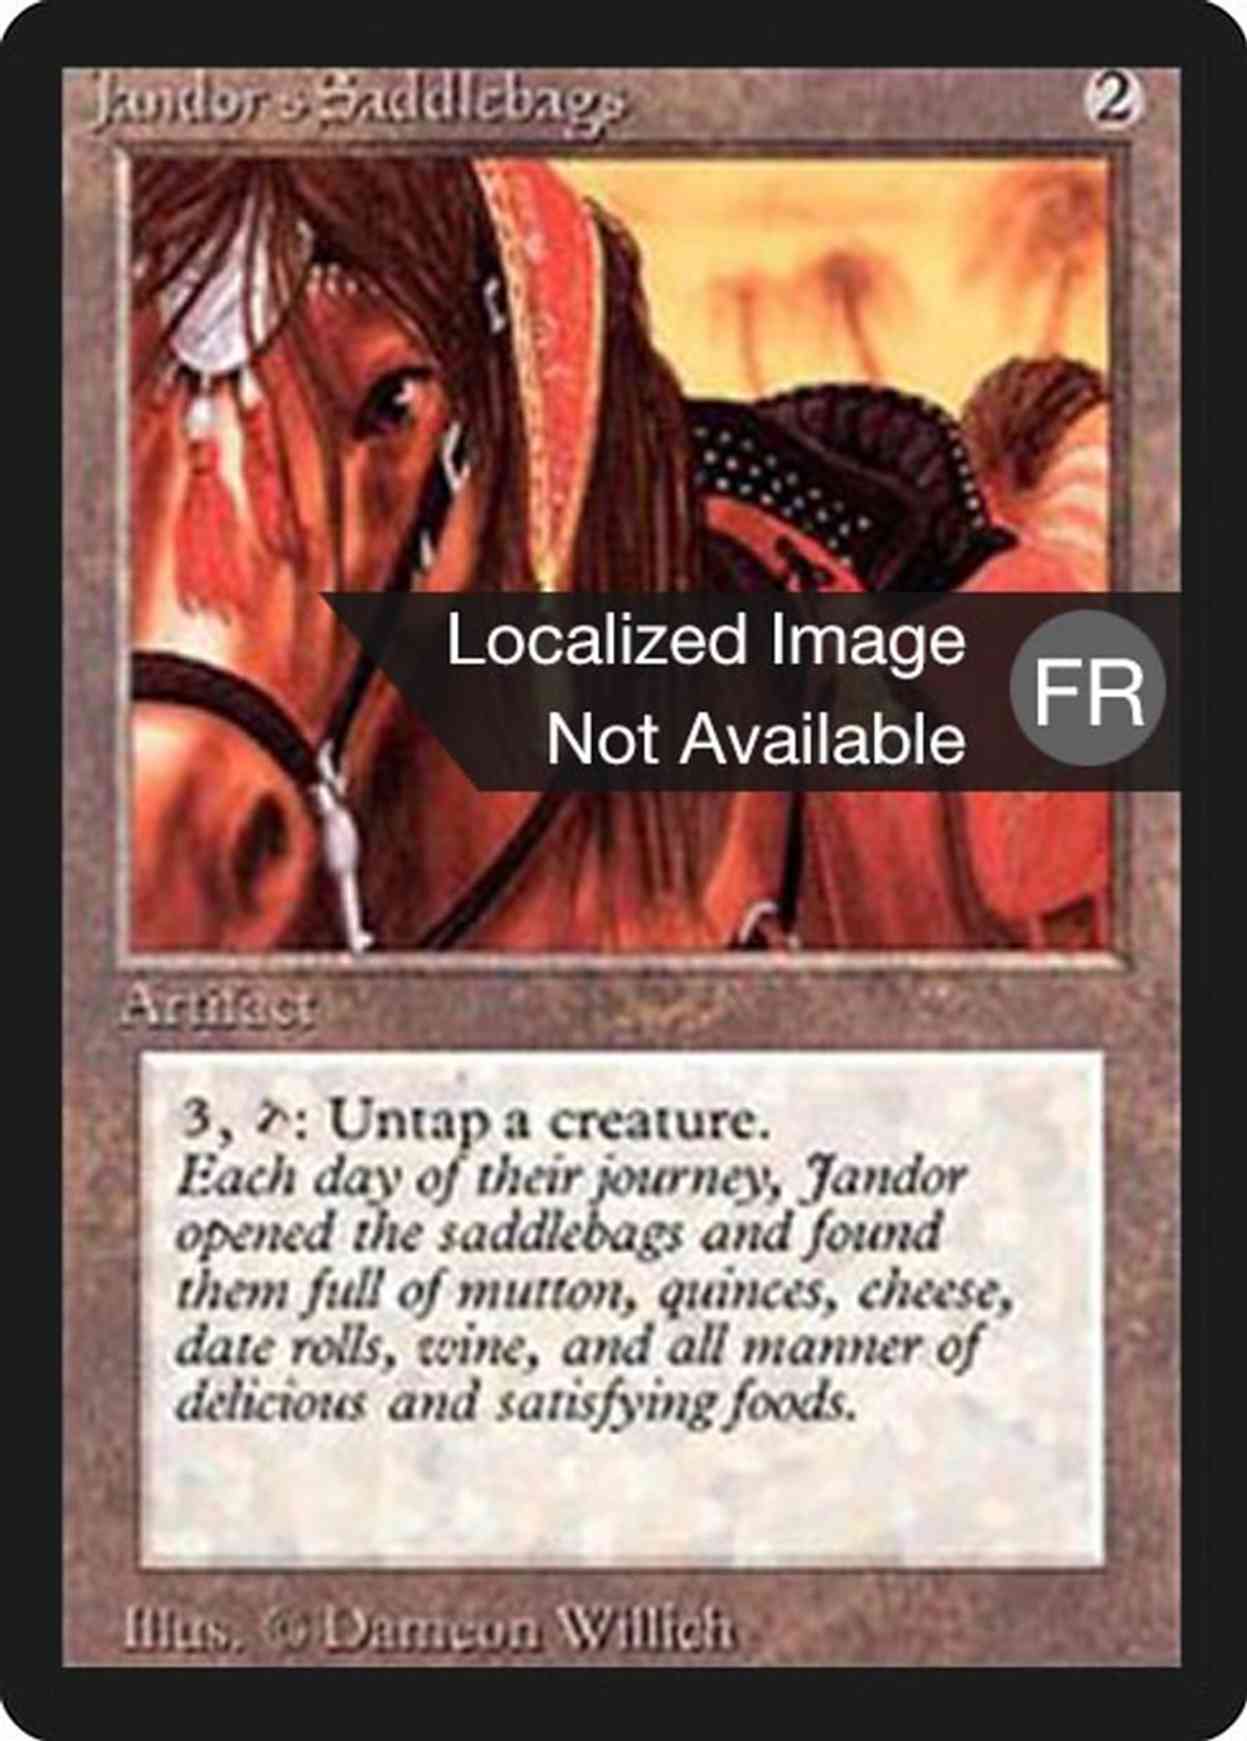 Jandor's Saddlebags magic card front